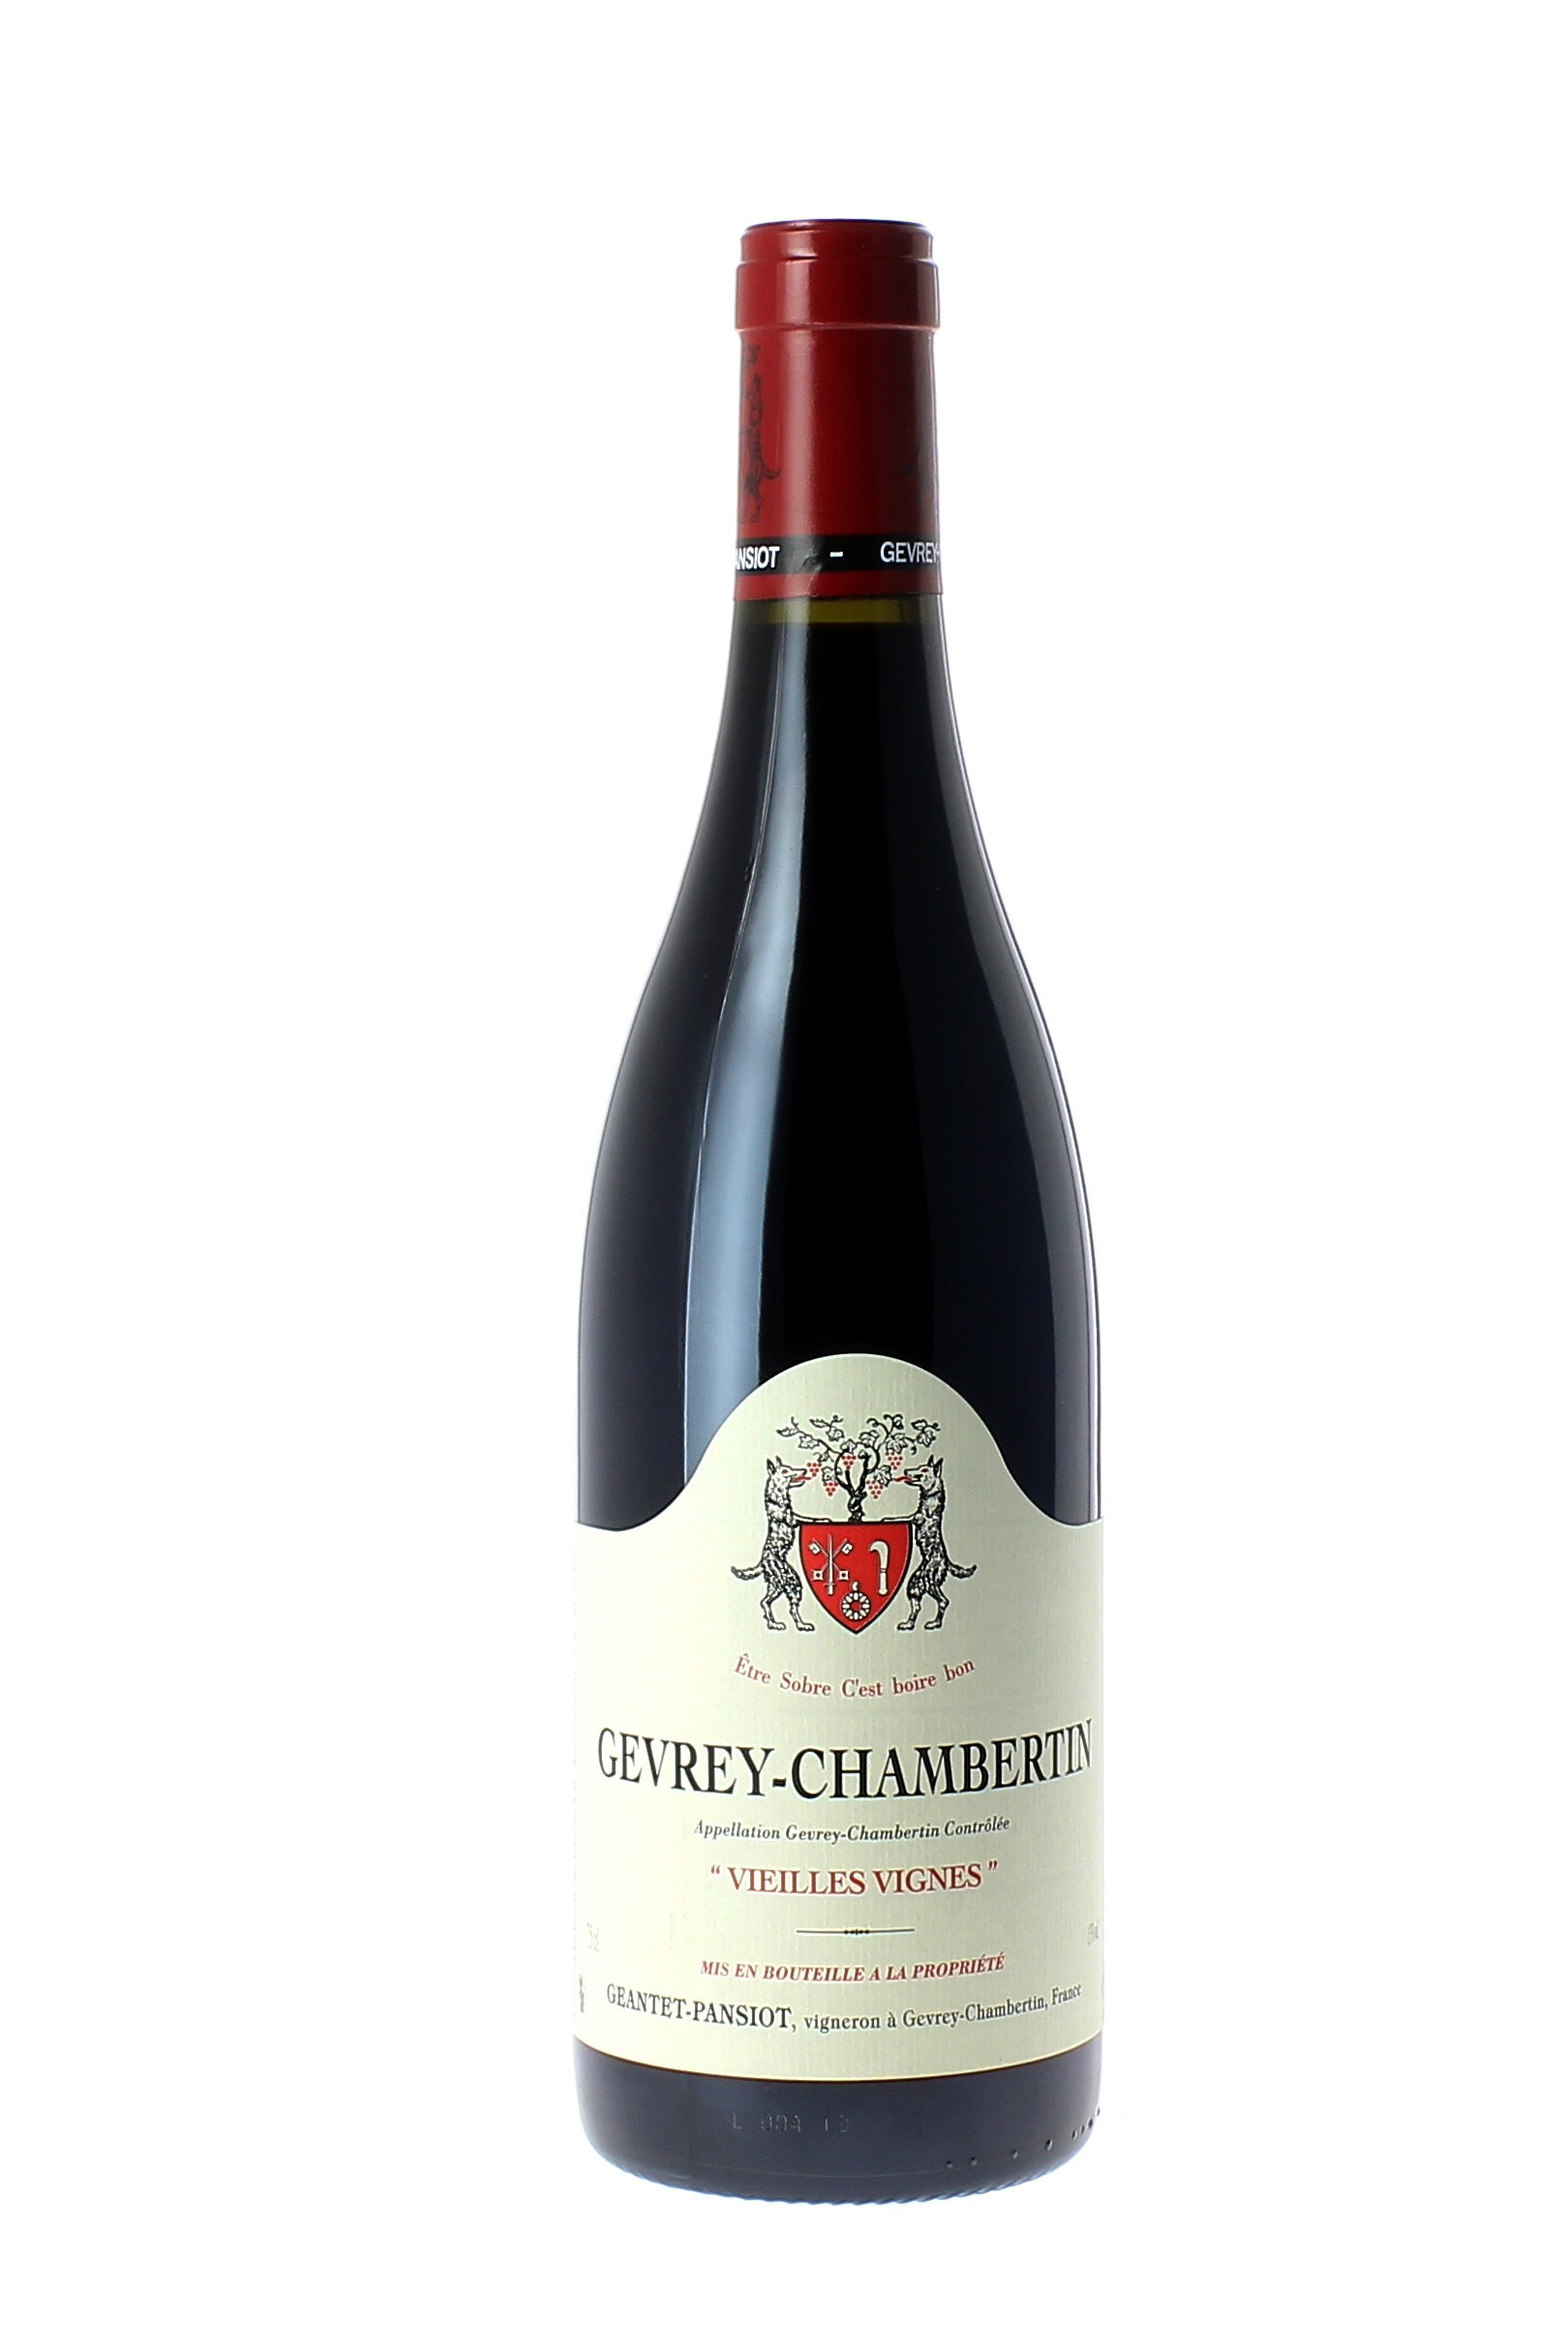 Gevrey chambertin vieilles vignes 2011 Domaine GEANTET PANSIOT, Bourgogne rouge